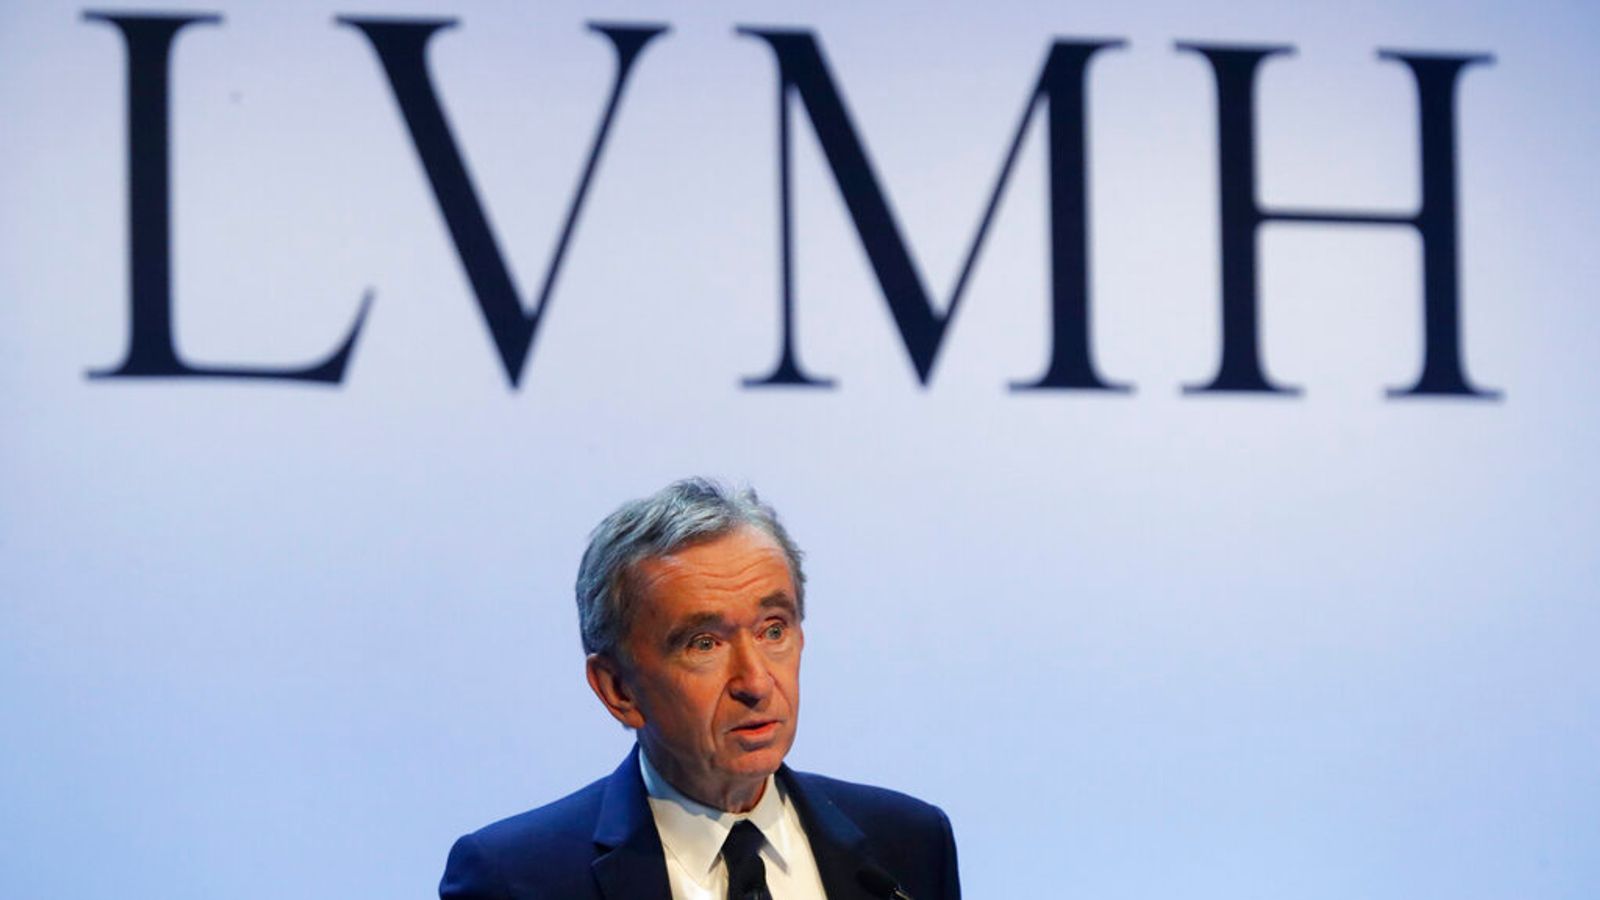 LVMH: Sales soar at luxury firm headed by world's richest man Bernard Arnault